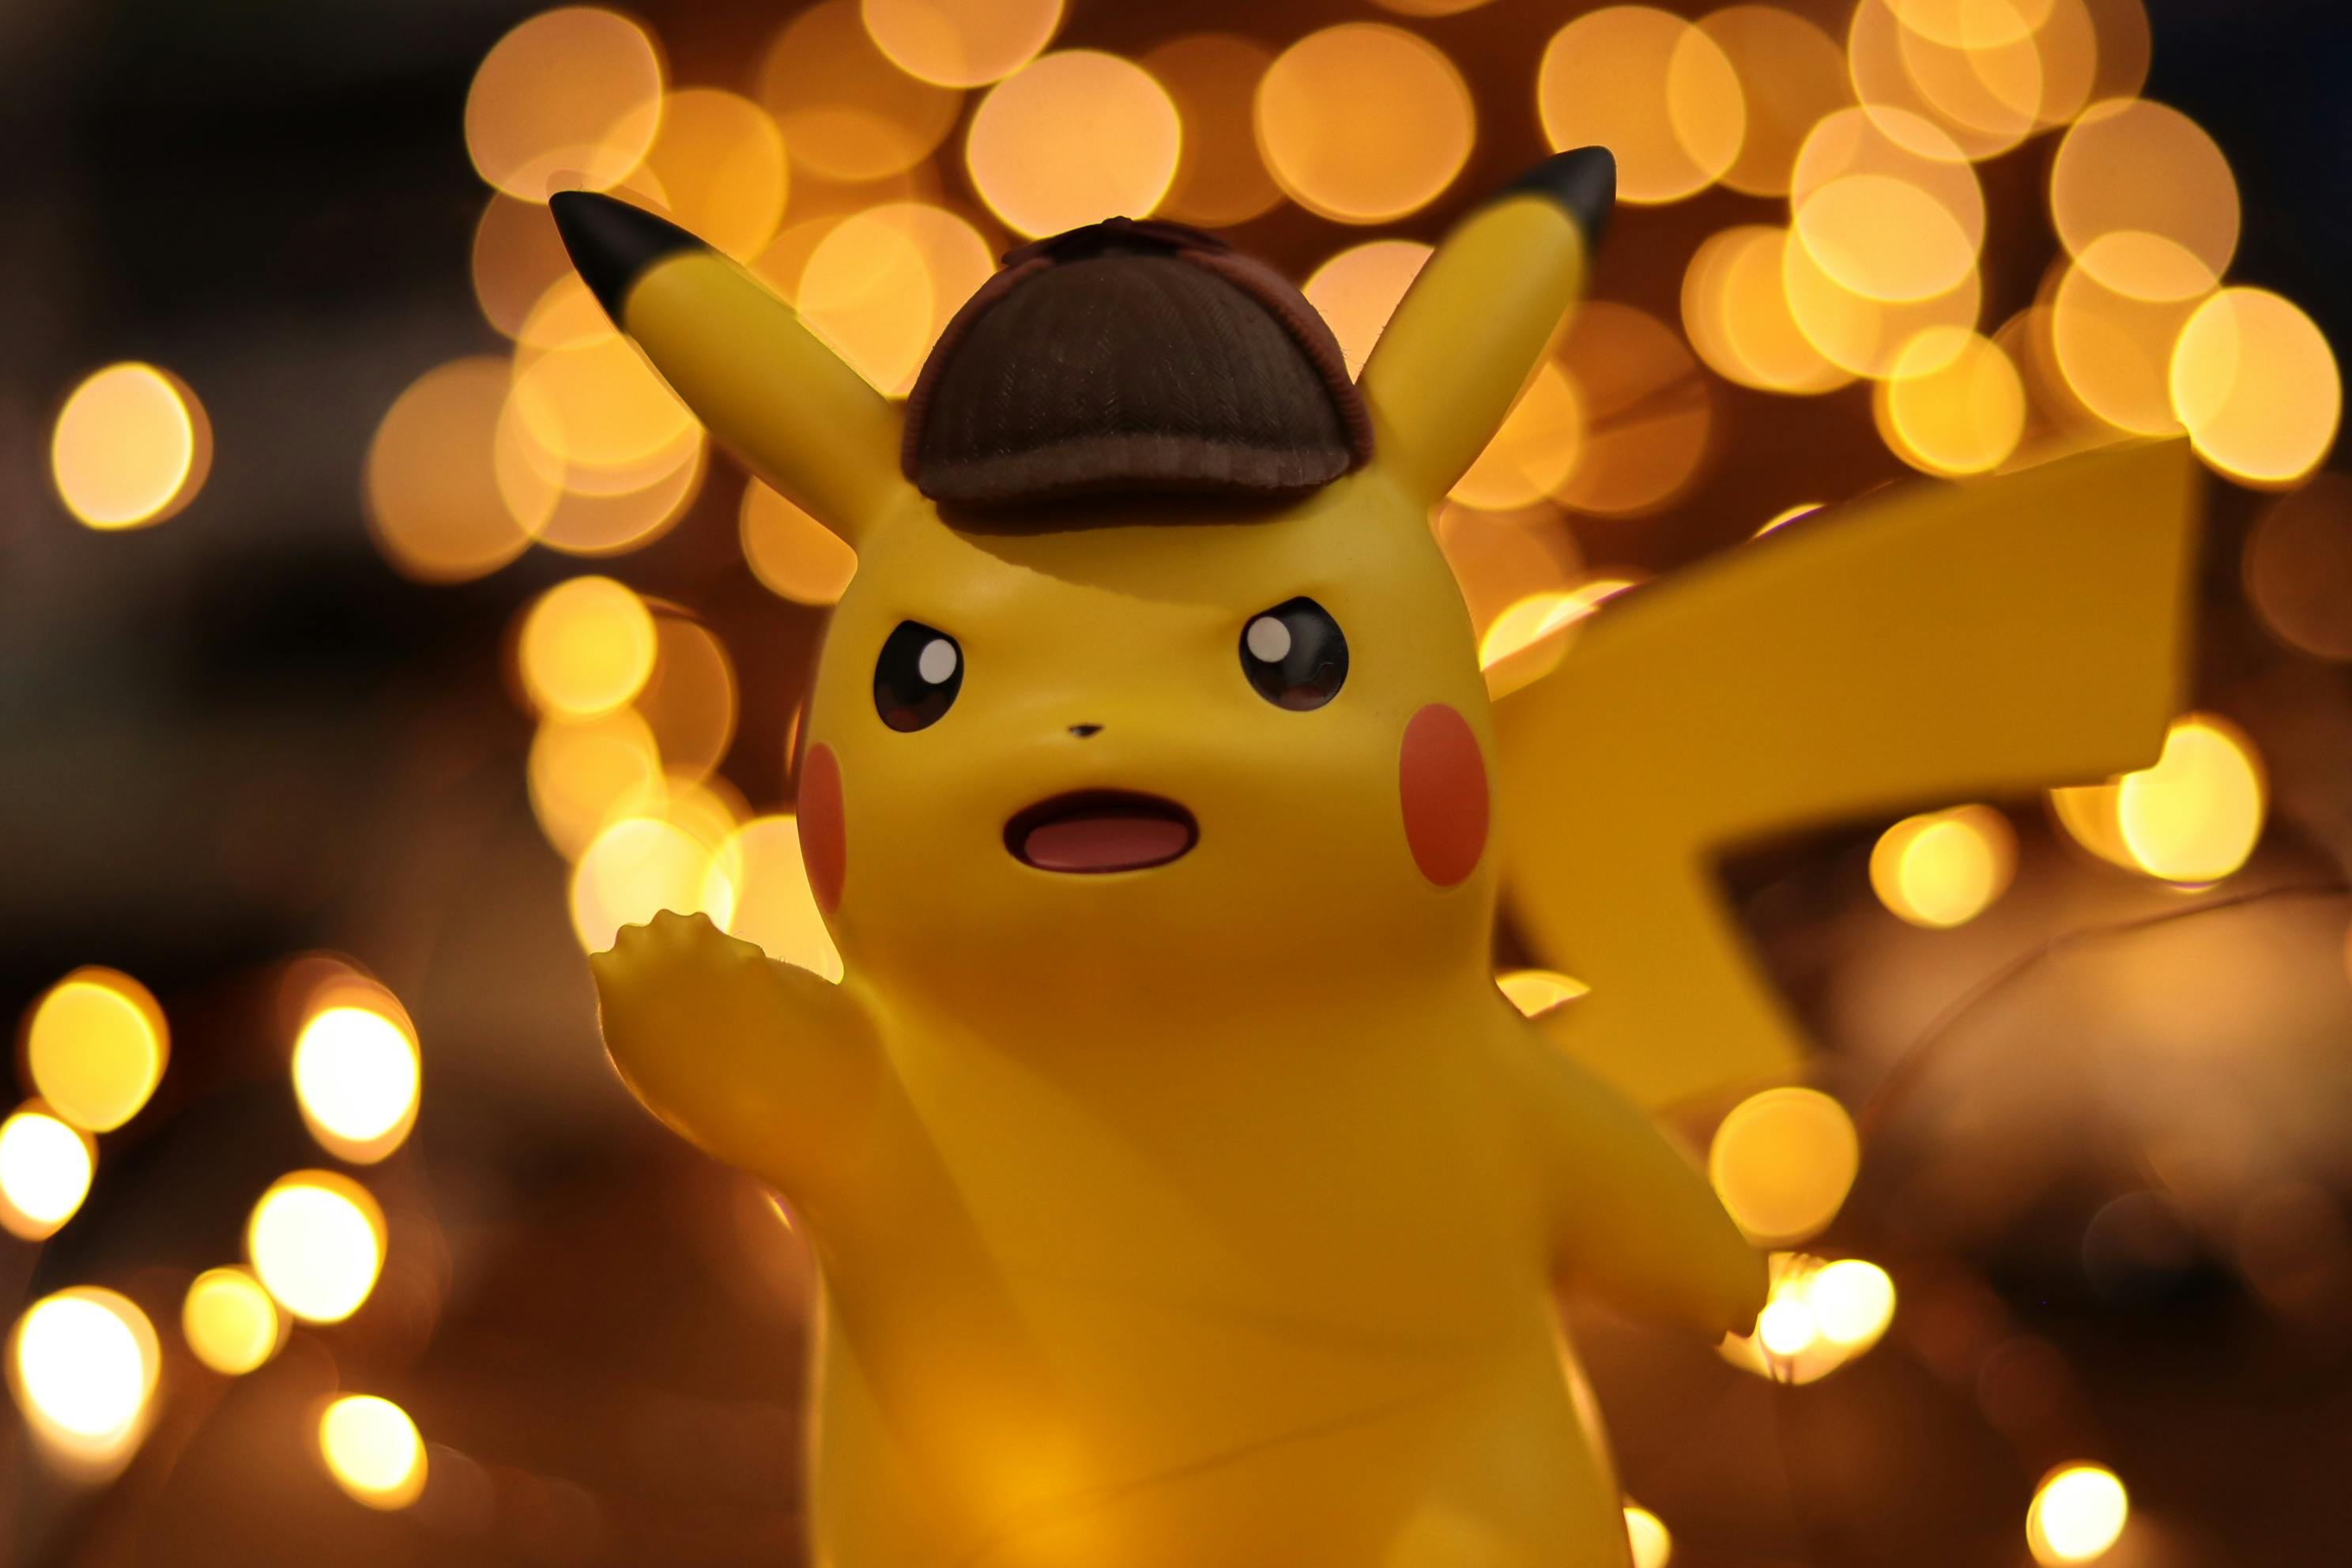 Pikachu Pokémon Photos, Download The BEST Free Pikachu Pokémon Stock Photos  & HD Images